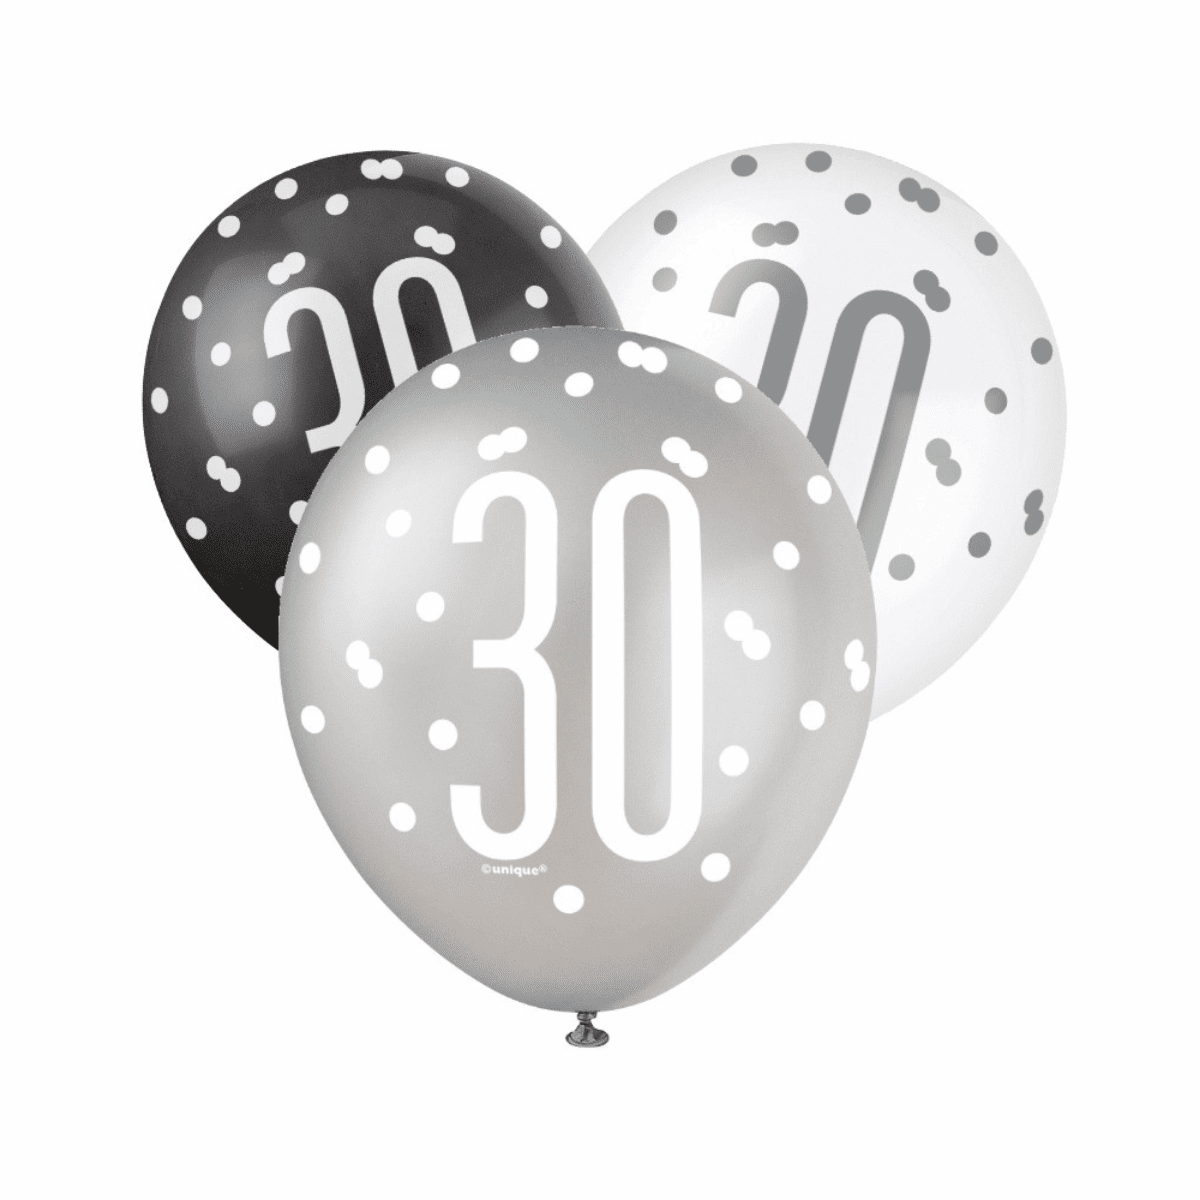 Black, Silver, & White Latex Balloons 30th